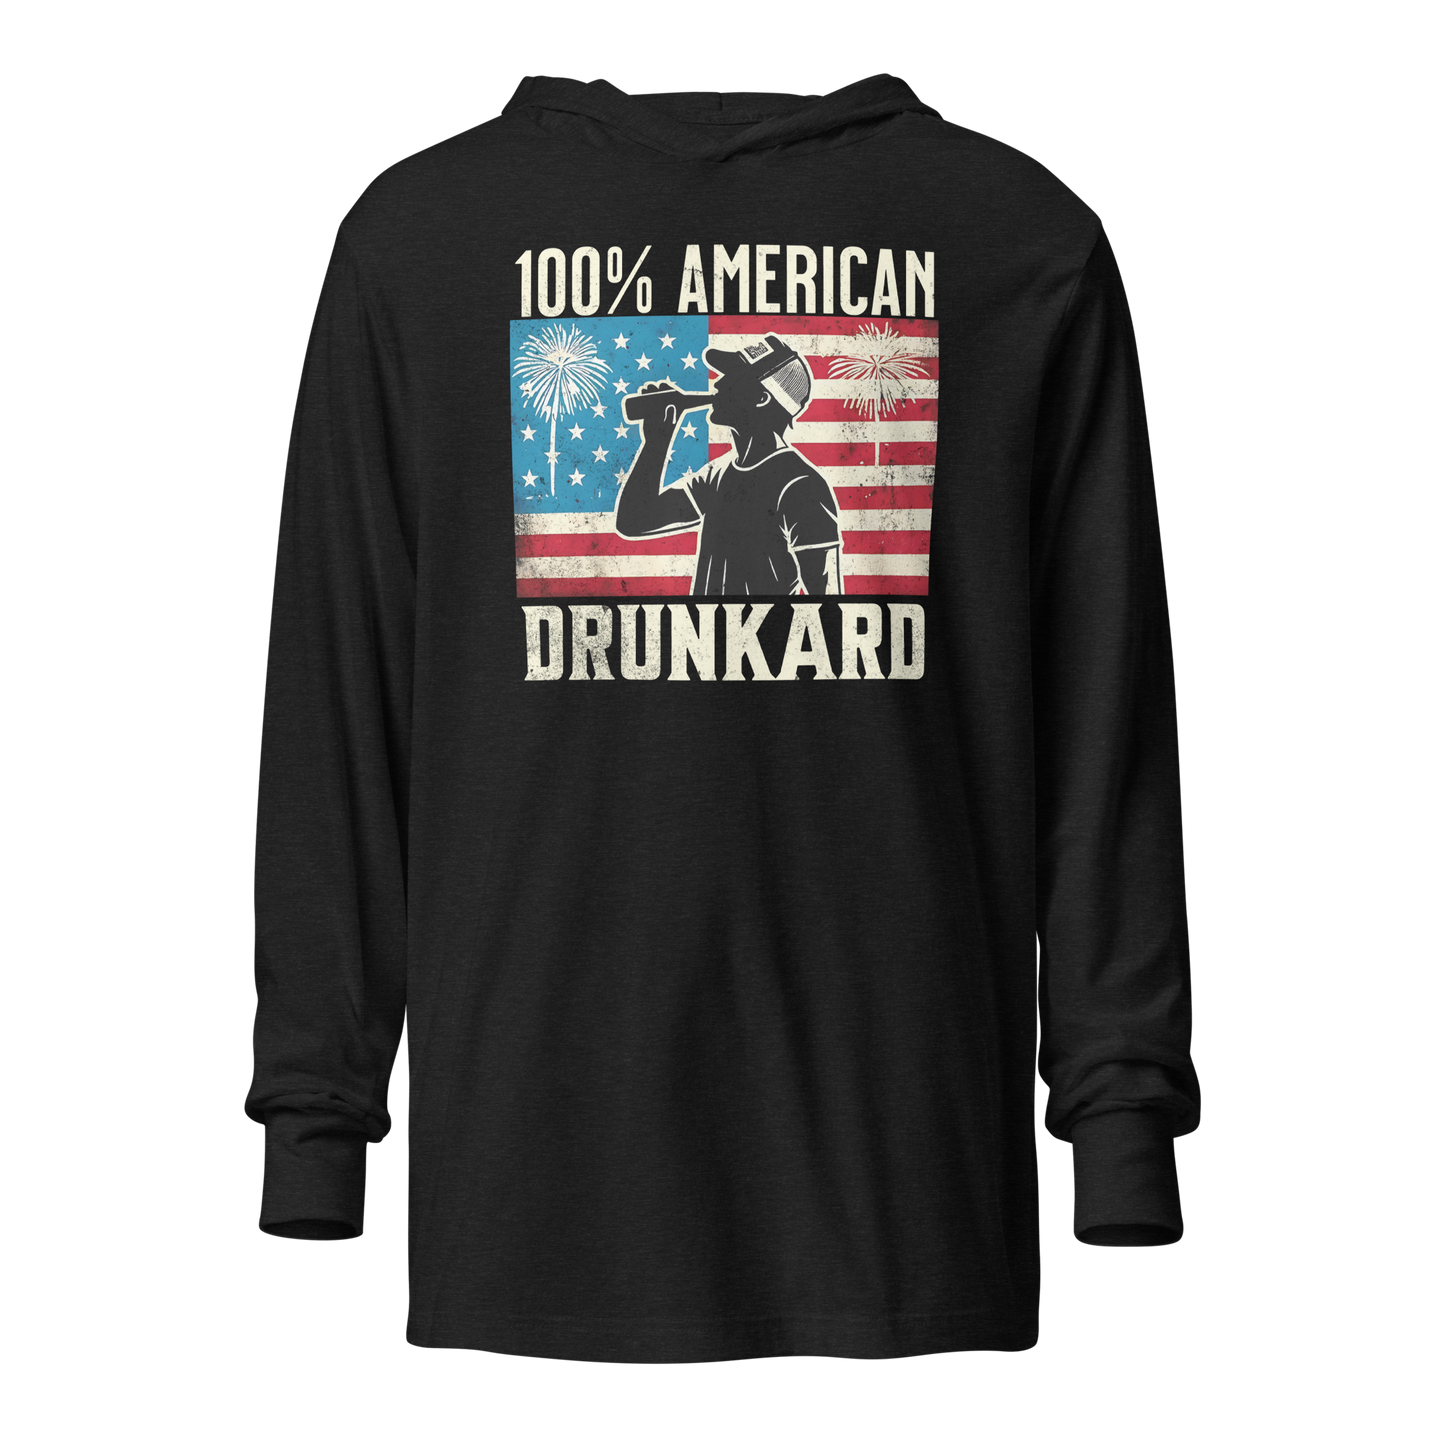 100% American Drunkard Lightweight Hoodie - Patriotic Fun for 4th of July